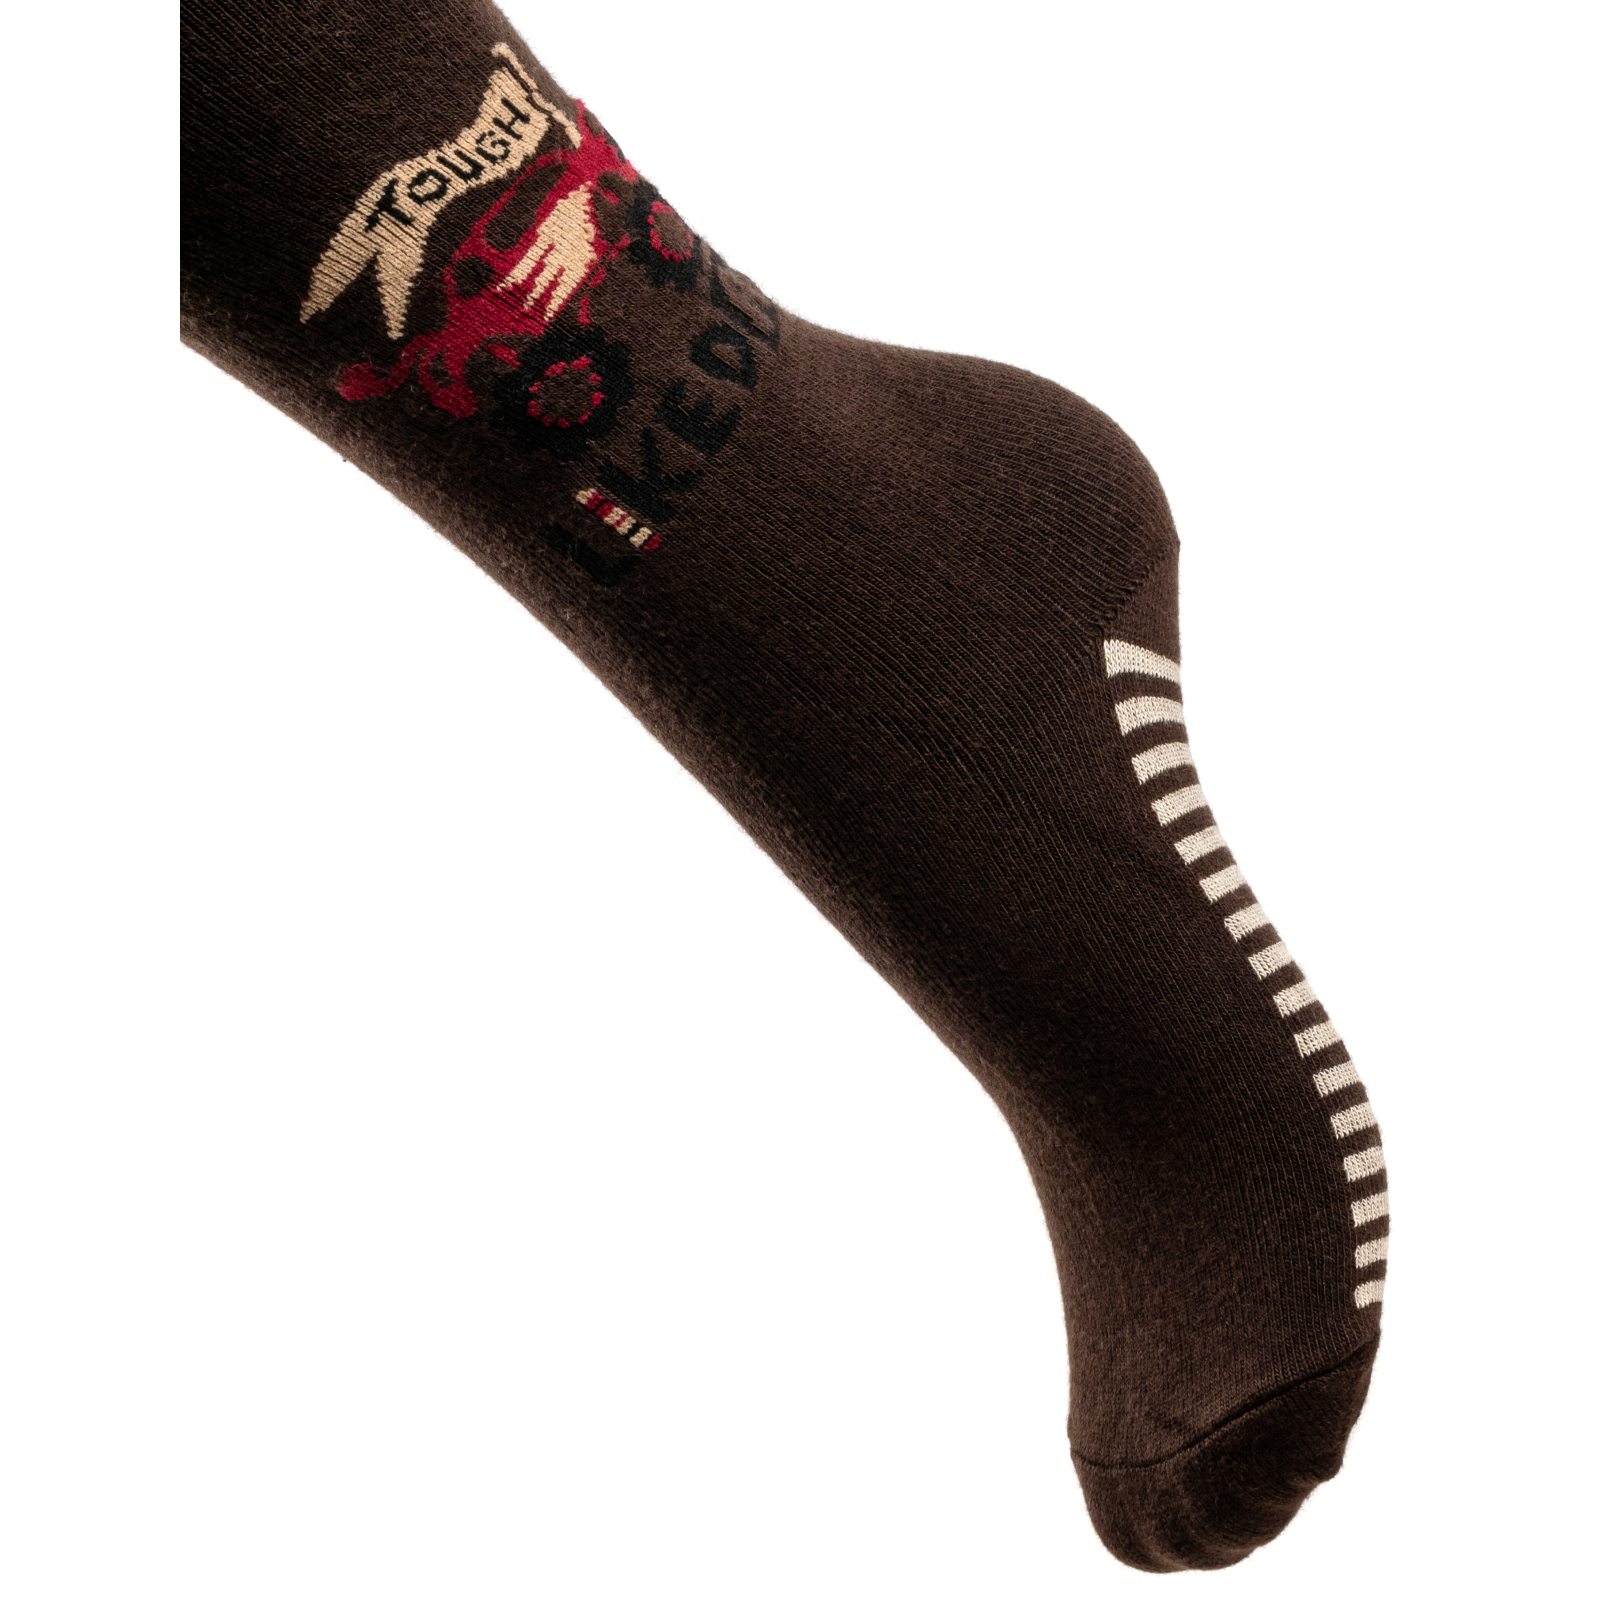 Колготки UCS Socks с машиной (M0C0301-1245-3B-brown) изображение 2